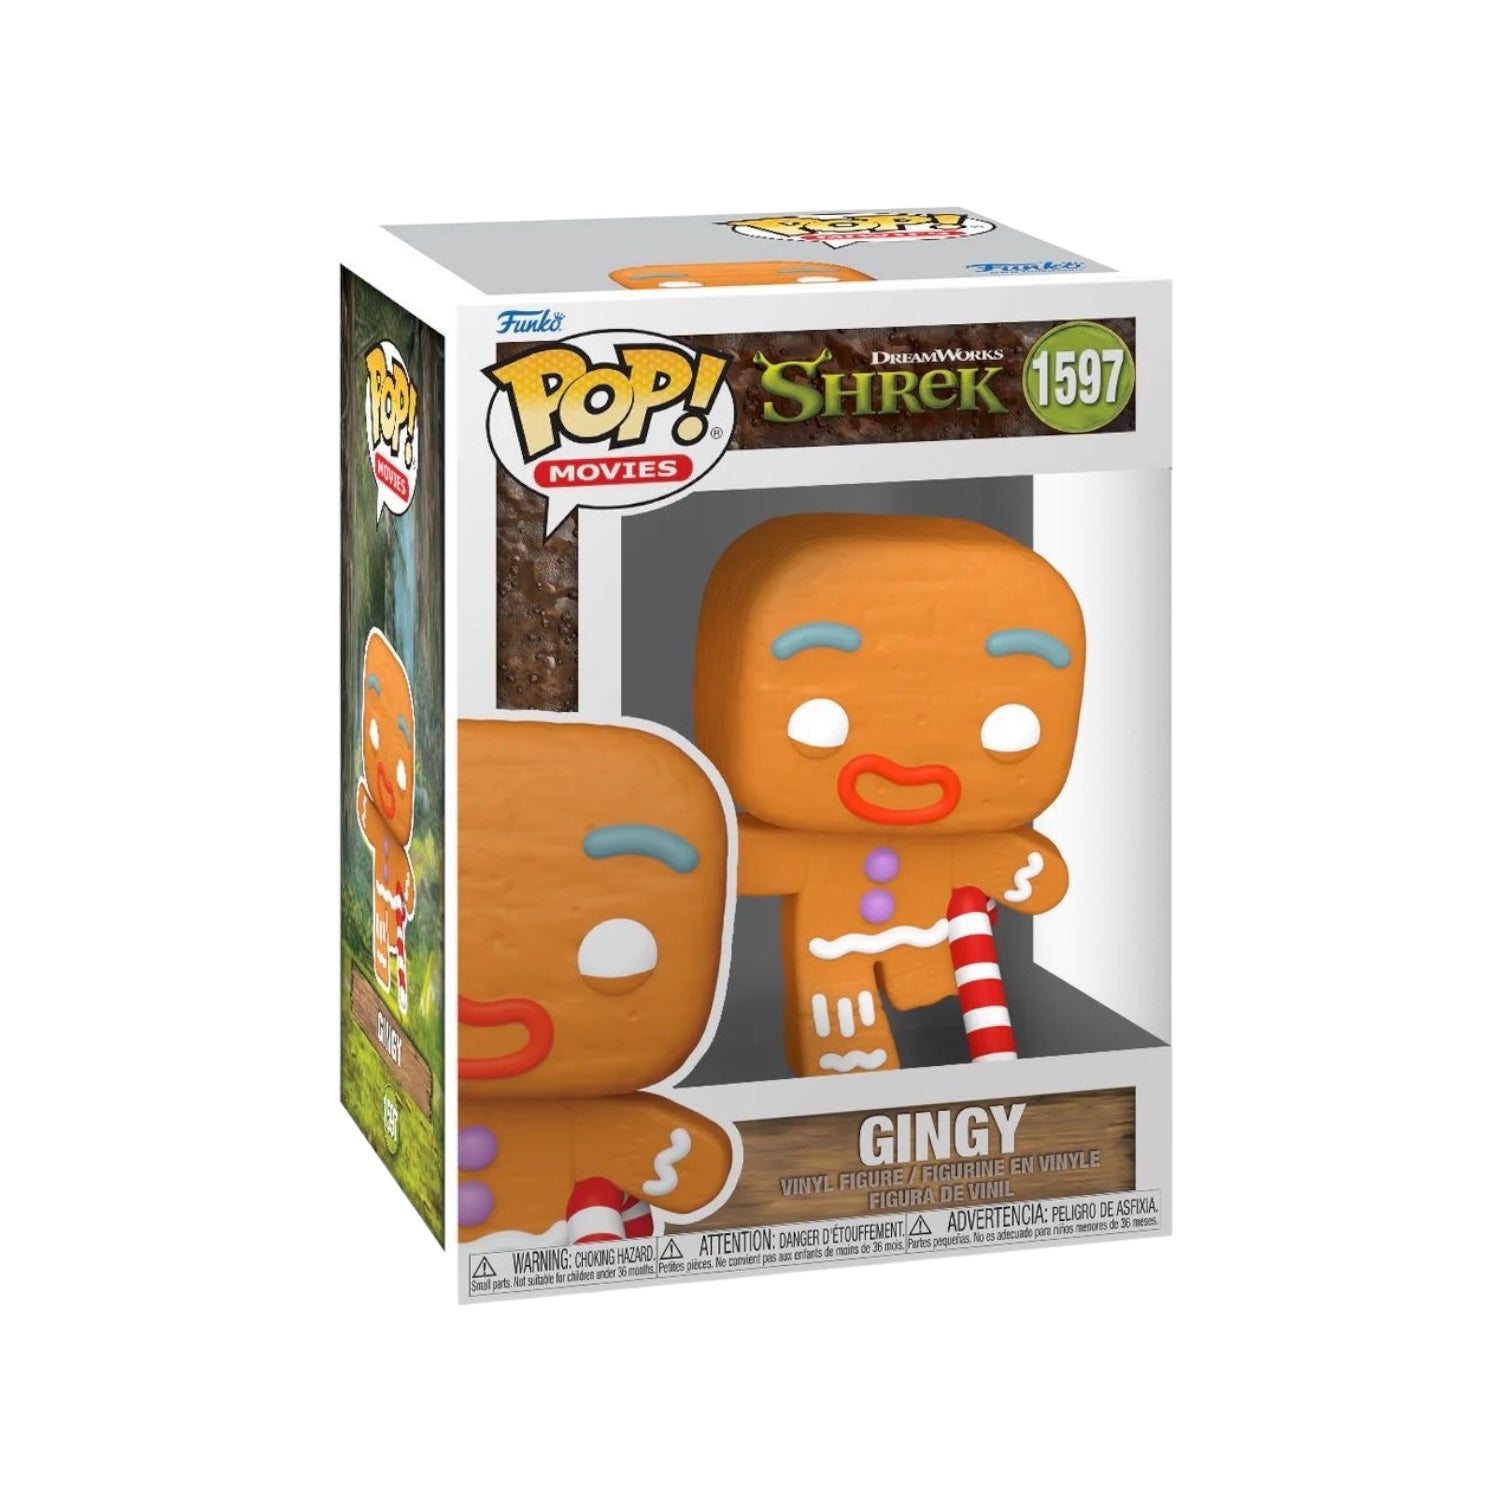 Gingy #1597 Funko Pop!  - Shrek - PREORDER